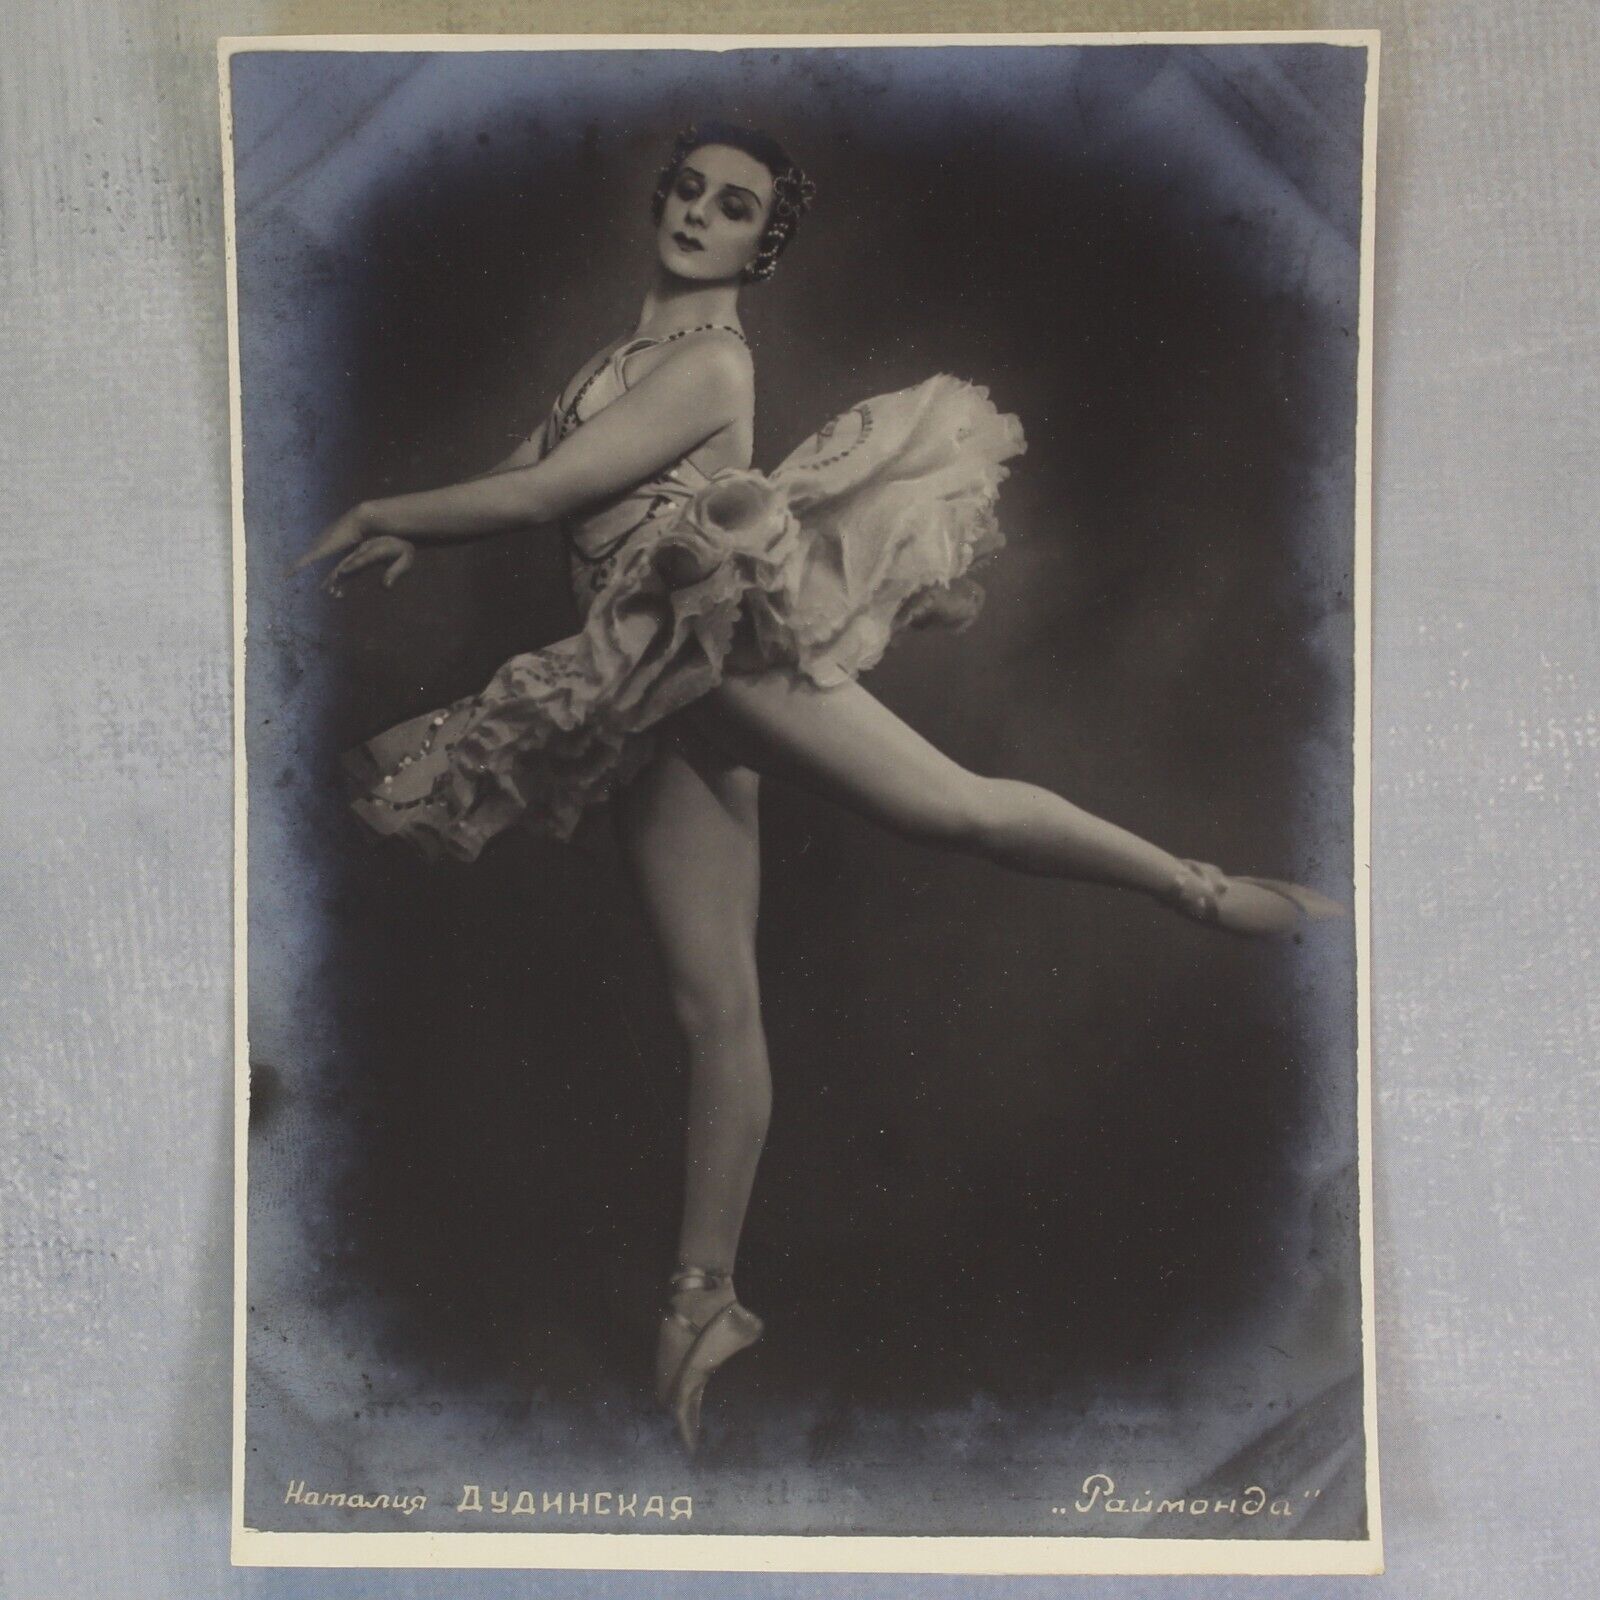 Russian ballet star Natalia DUDINSKAYA - RAYMONDA Russian photo postcard 1940s🩰